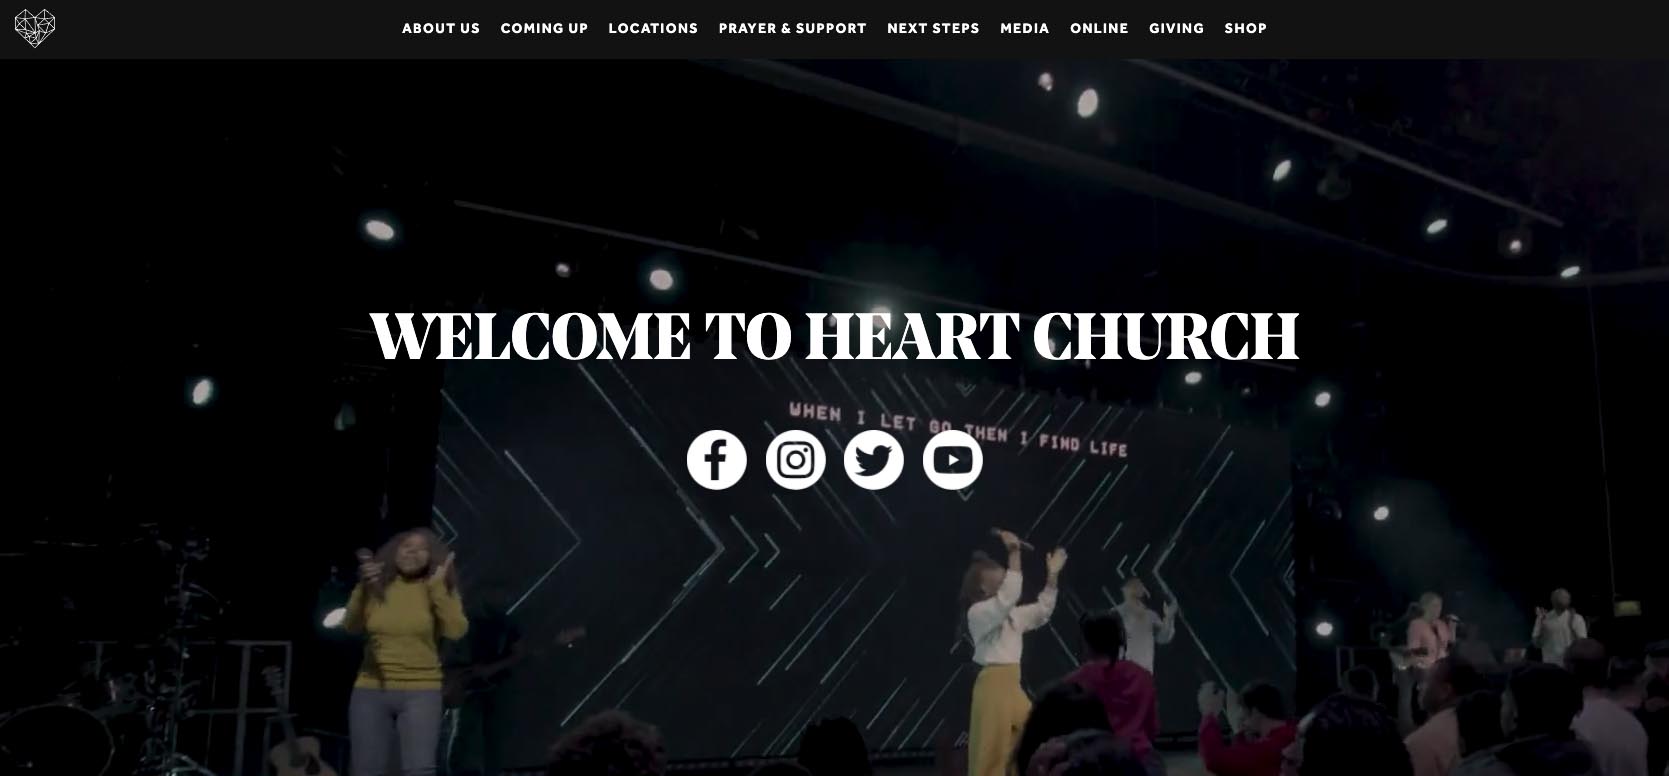 Heart church homepage